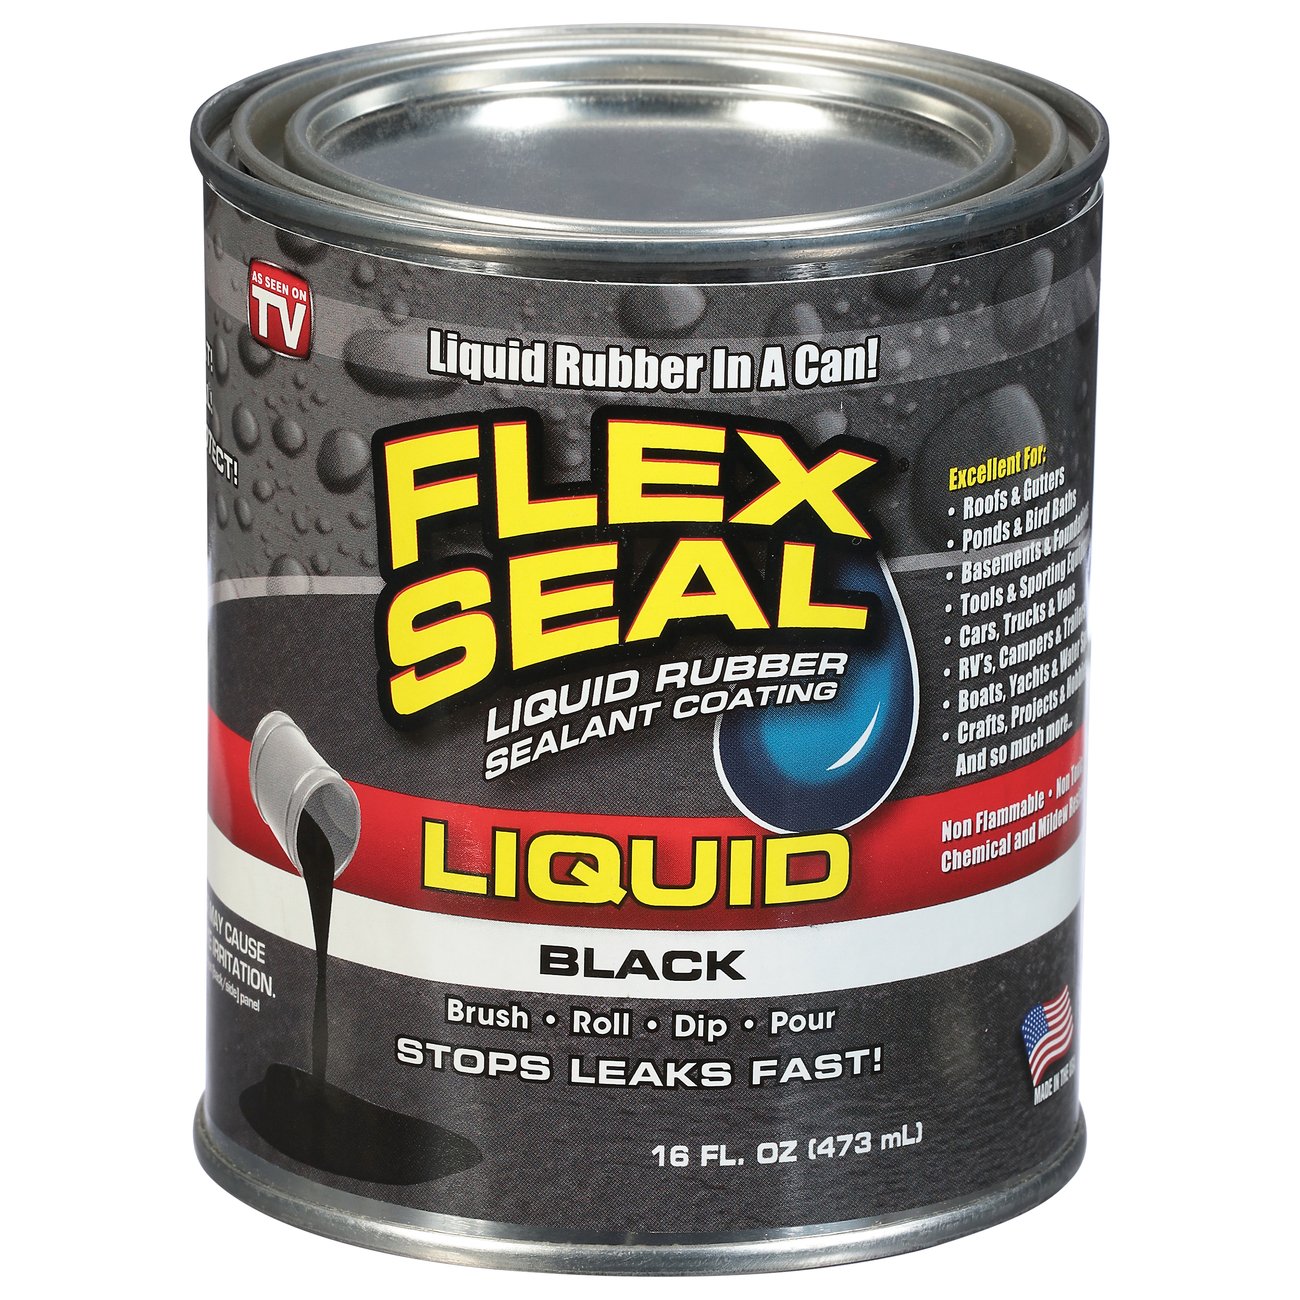 Flex Seal Liquid Rubber Sealant Coating – Black - Shop Adhesives & Tape at  H-E-B